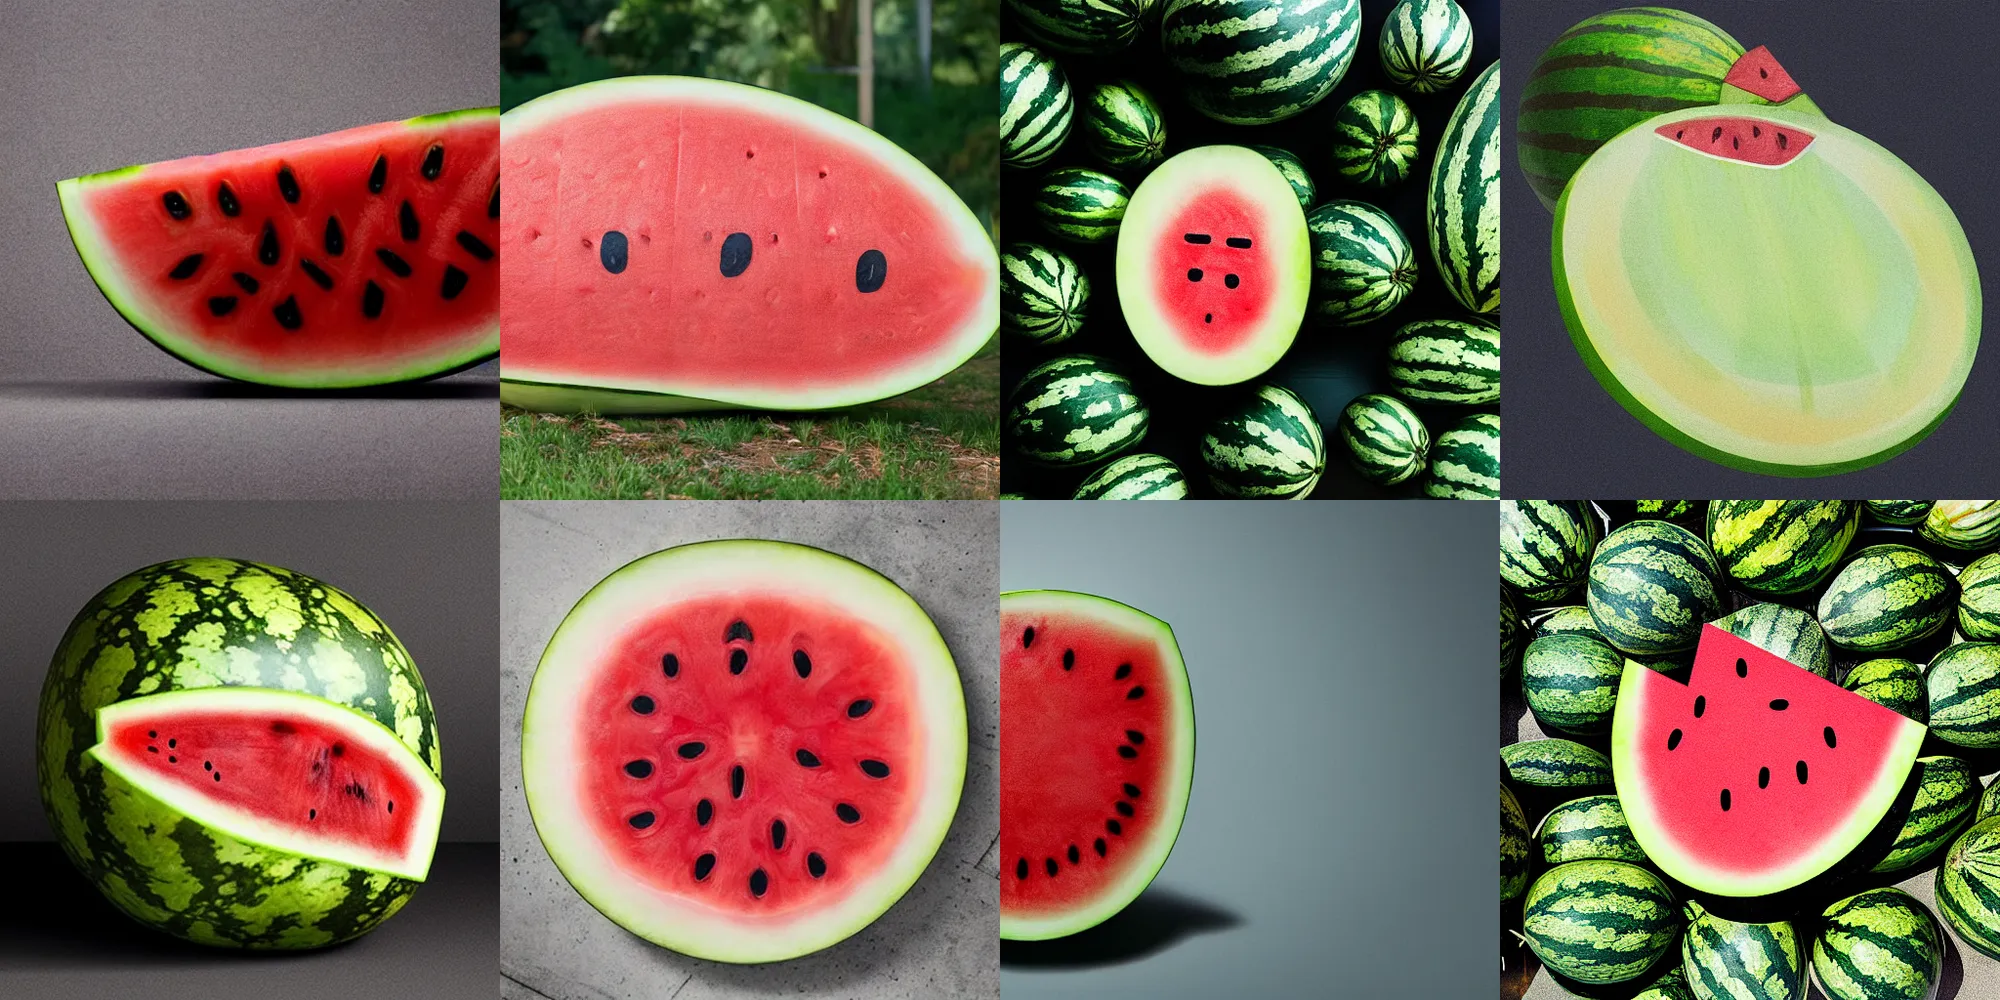 Prompt: portrait of a watermelon that looks like elon musk